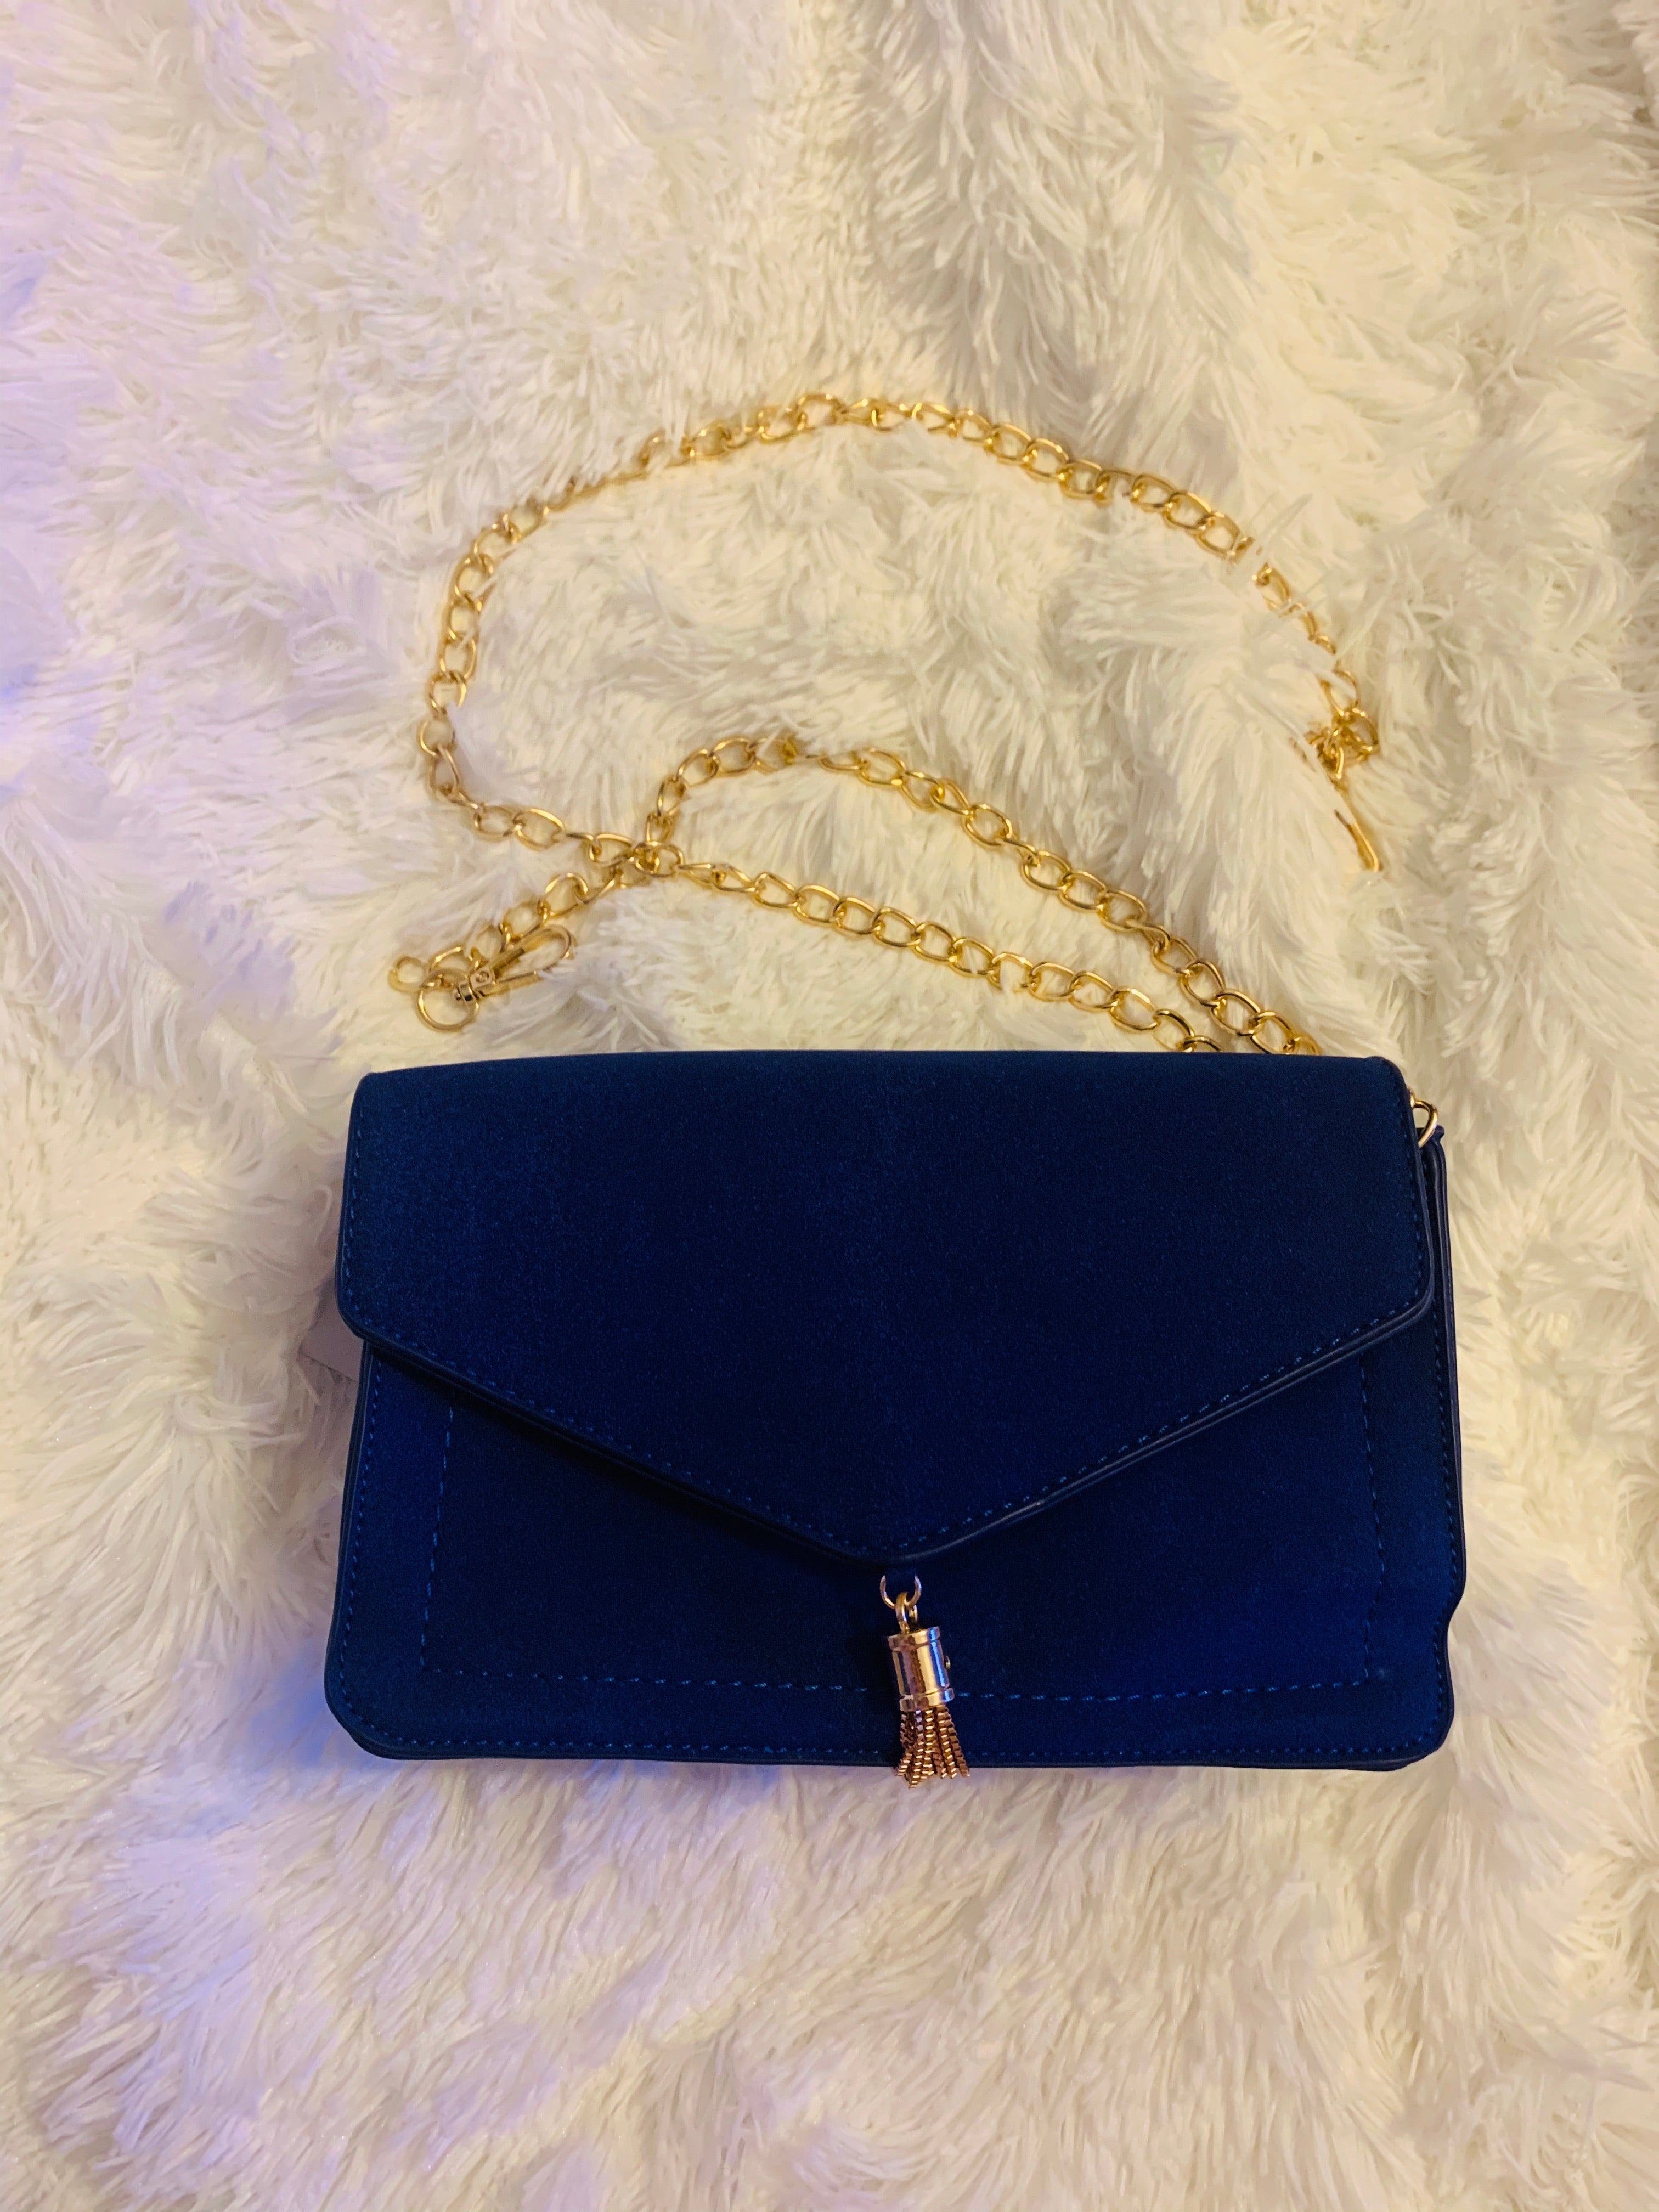 blue suede bag